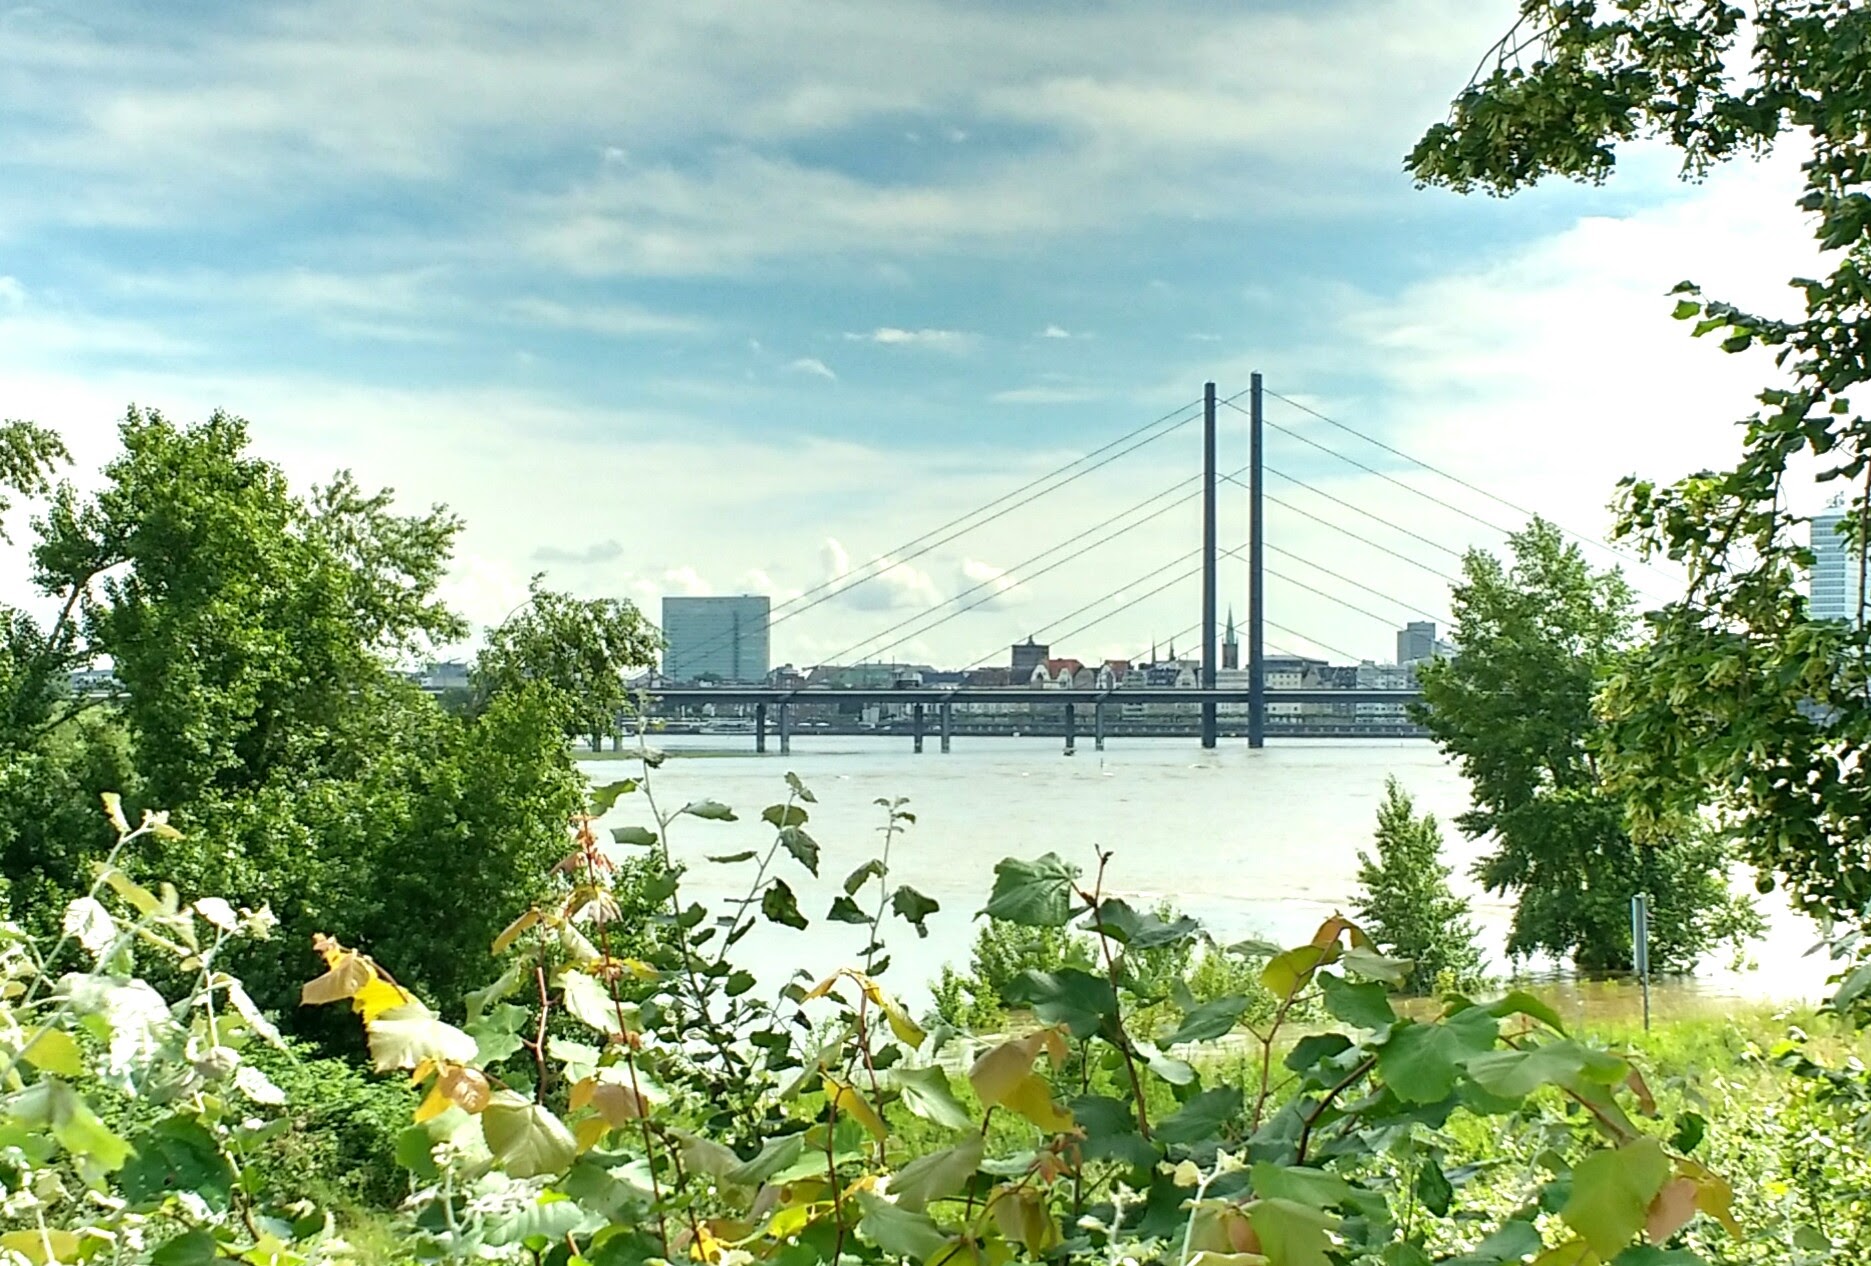 Düsseldorf glimpsed through the trees.